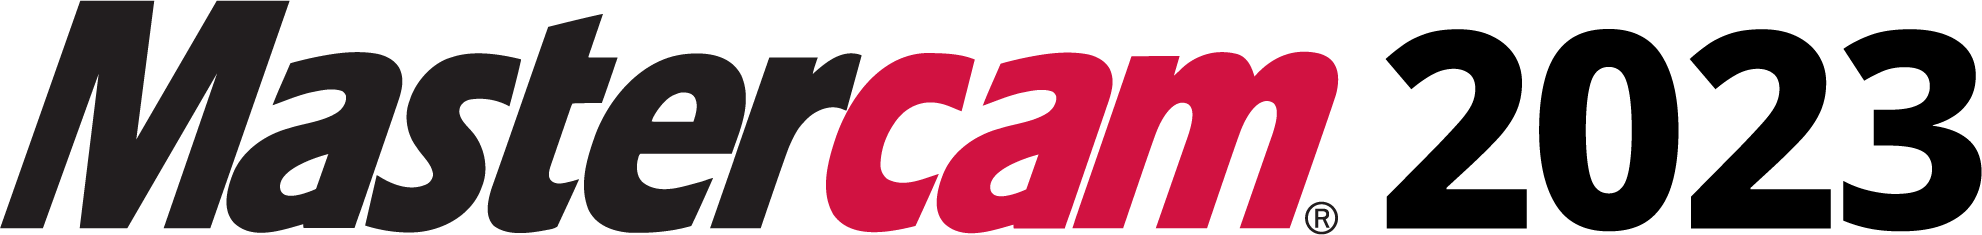 Mastercam 2023 Banner Logo